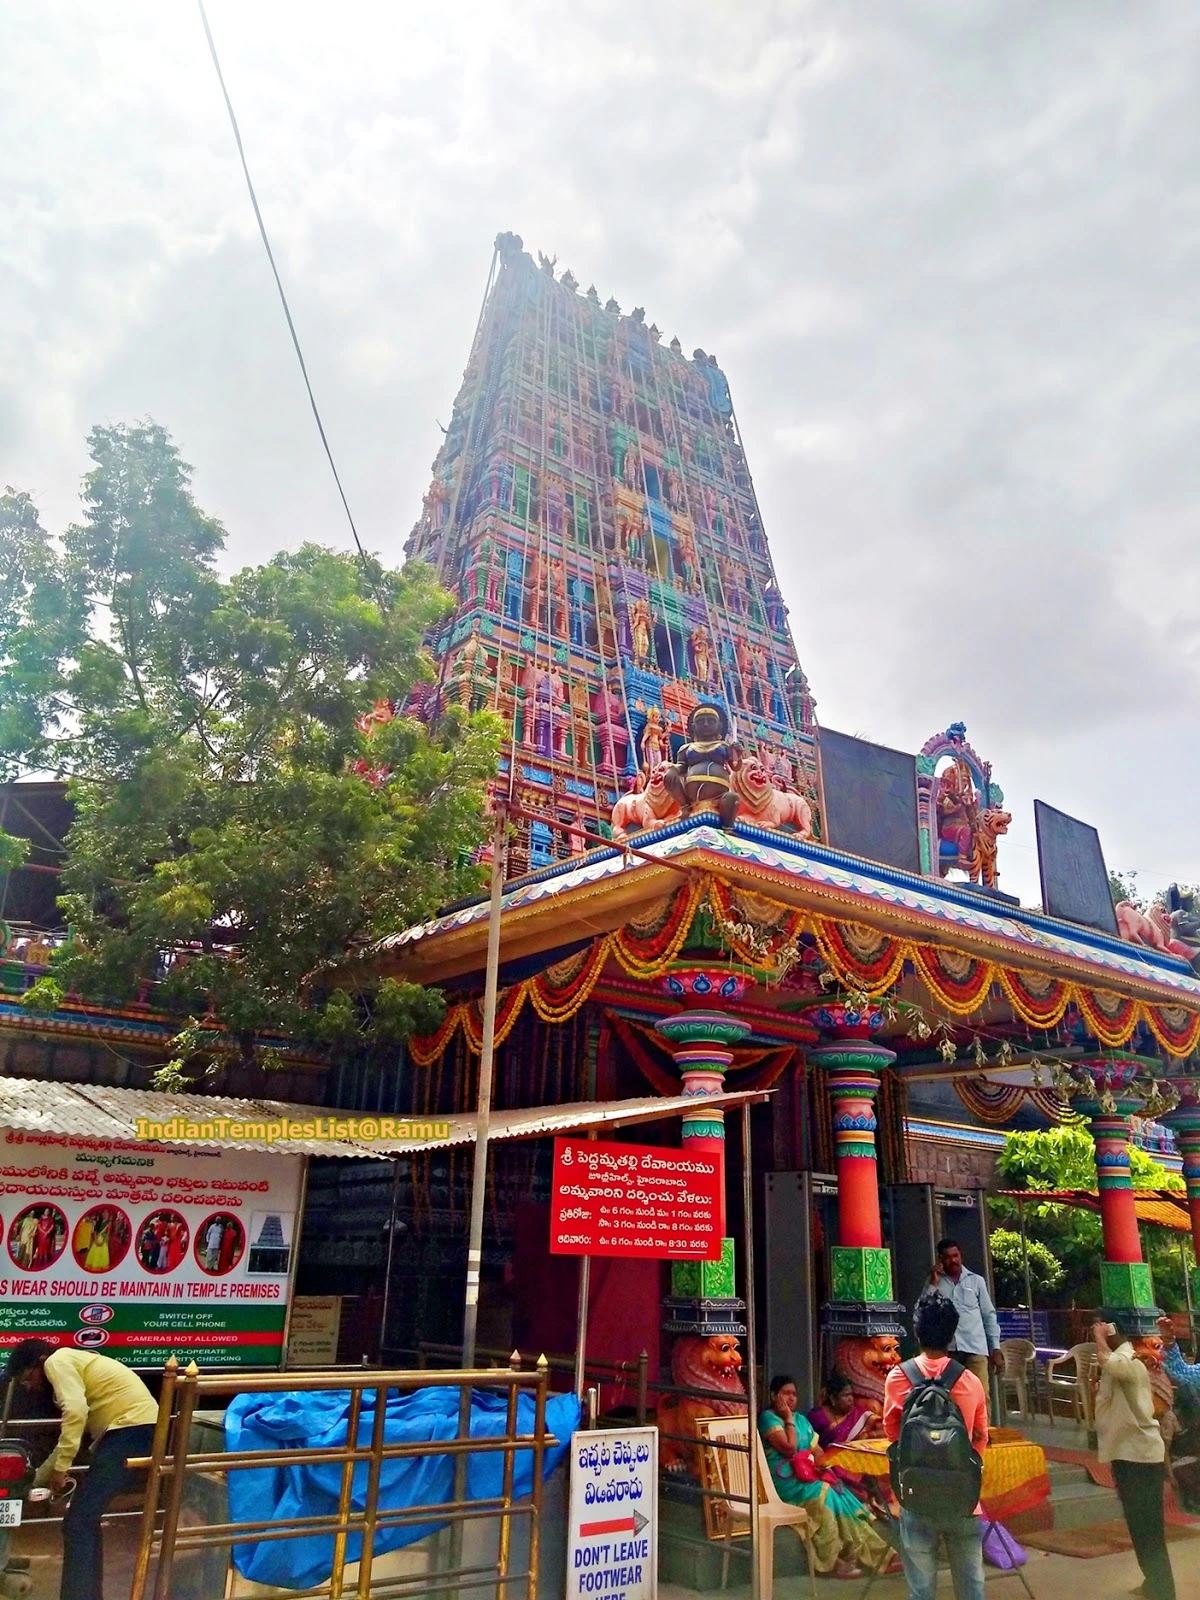 Peddamma Temple, Hyderabad